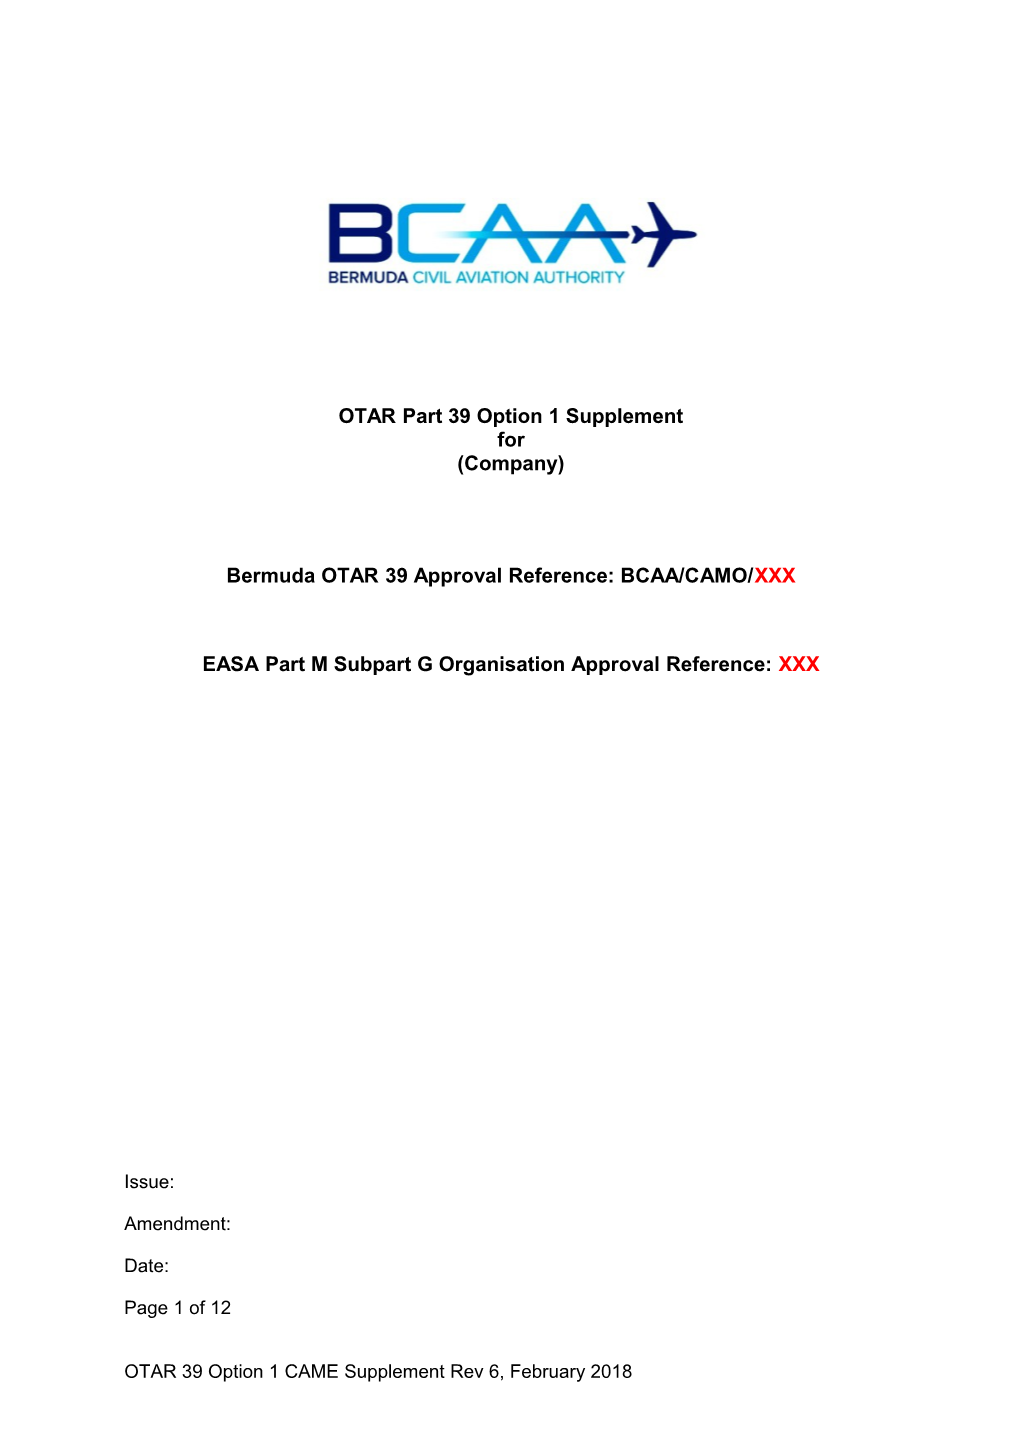 Bermuda OTAR 39 Approval Reference: BCAA/CAMO/XXX